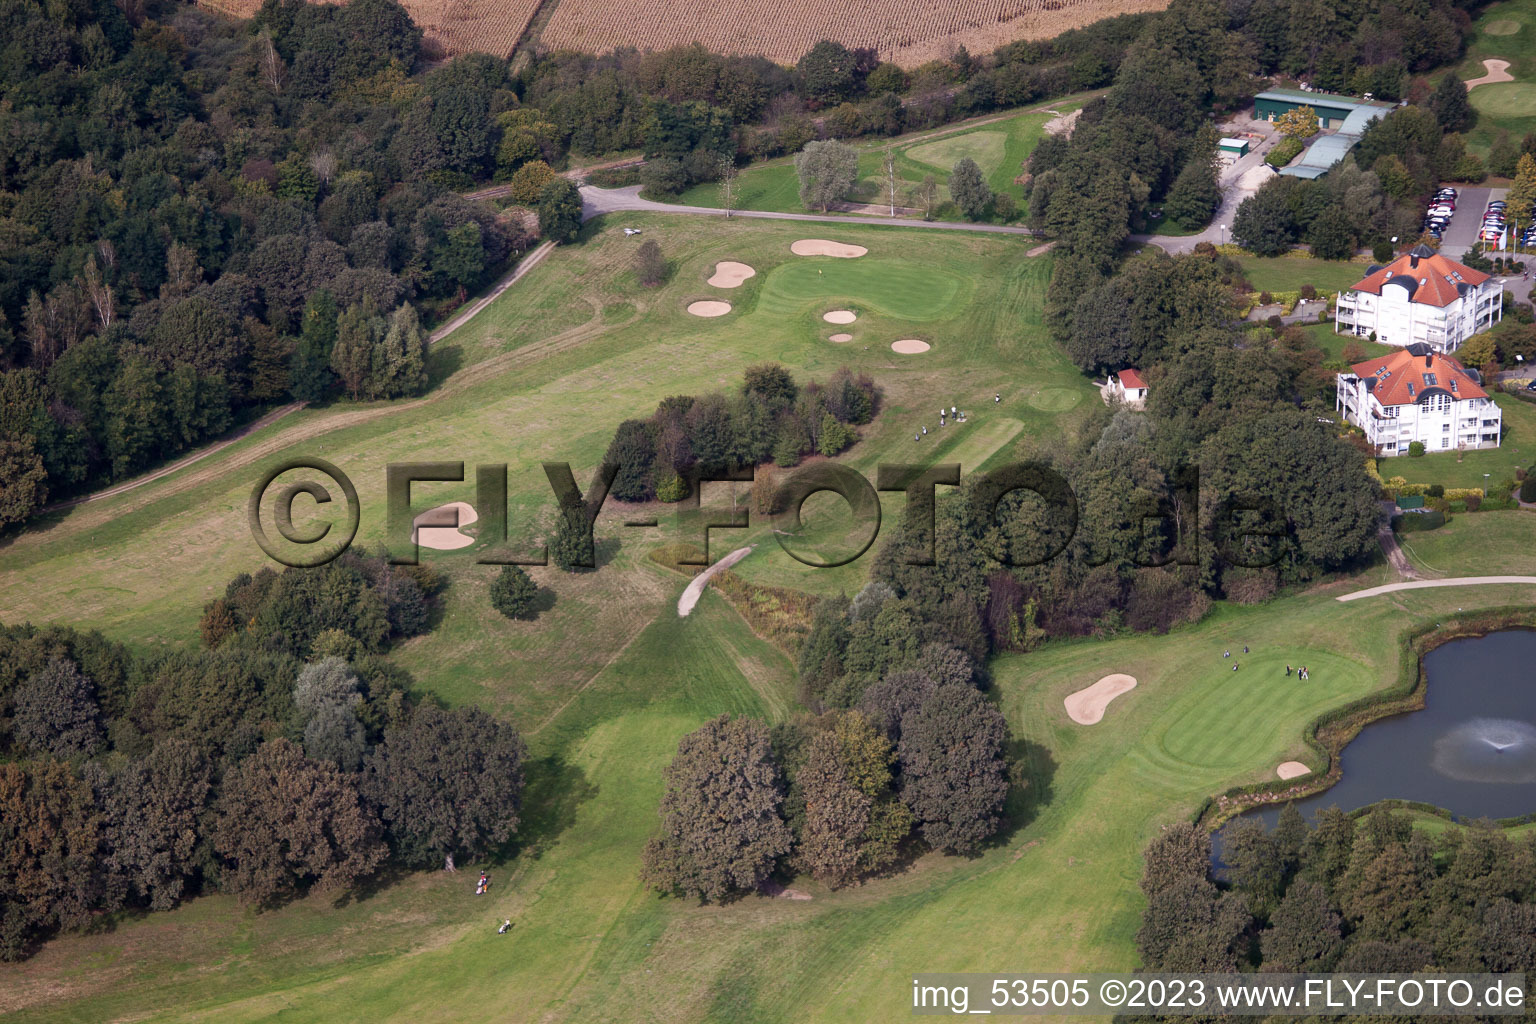 Baden-Baden Golf Club Soufflenheim in Soufflenheim in the state Bas-Rhin, France from above